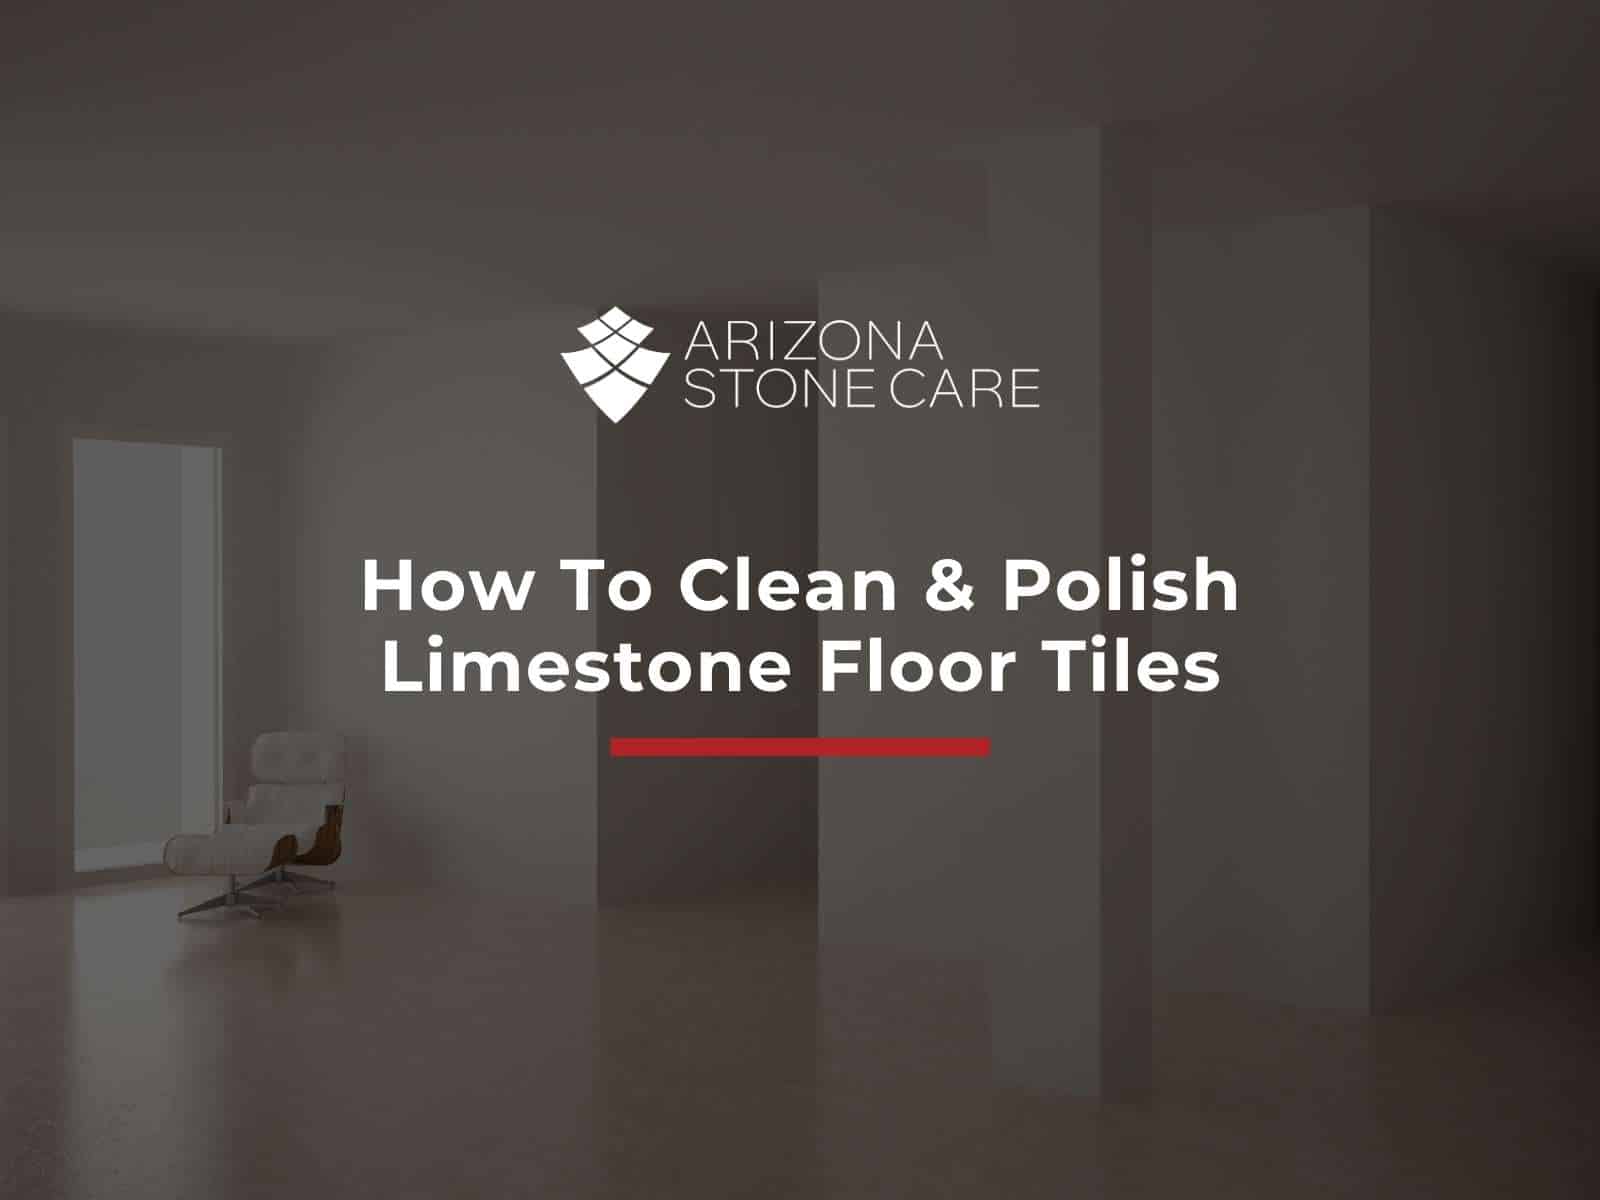 How To Clean & Polish Limestone Floor Tiles